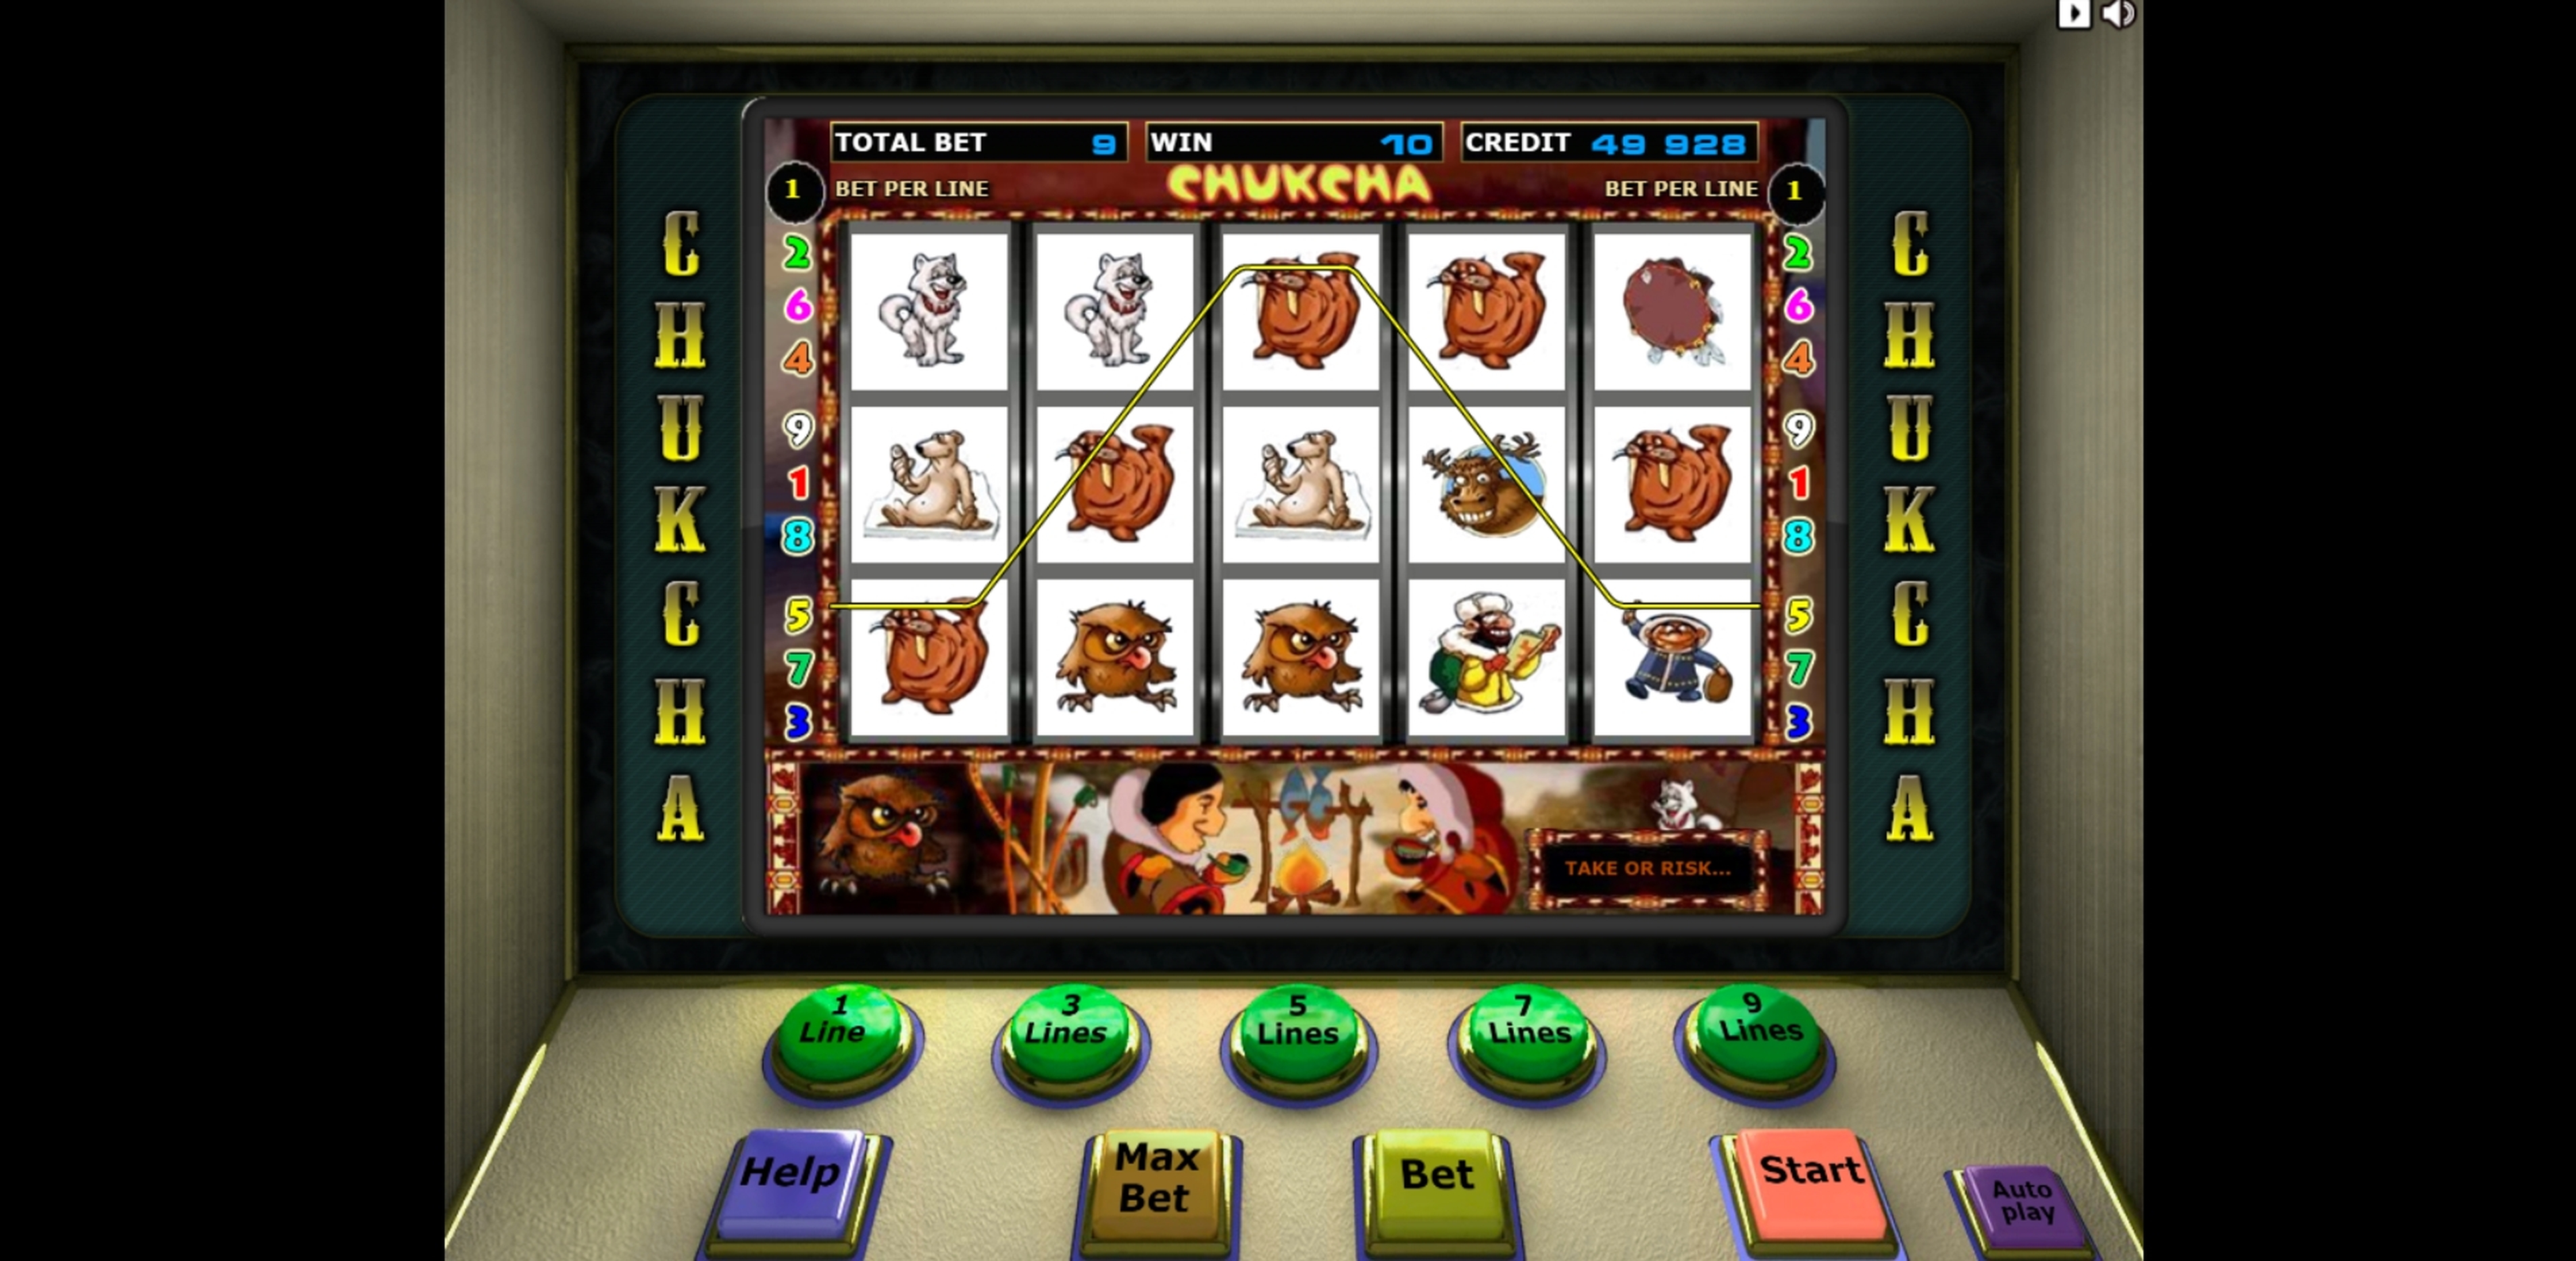 Win Money in Chukcha Free Slot Game by Unicum